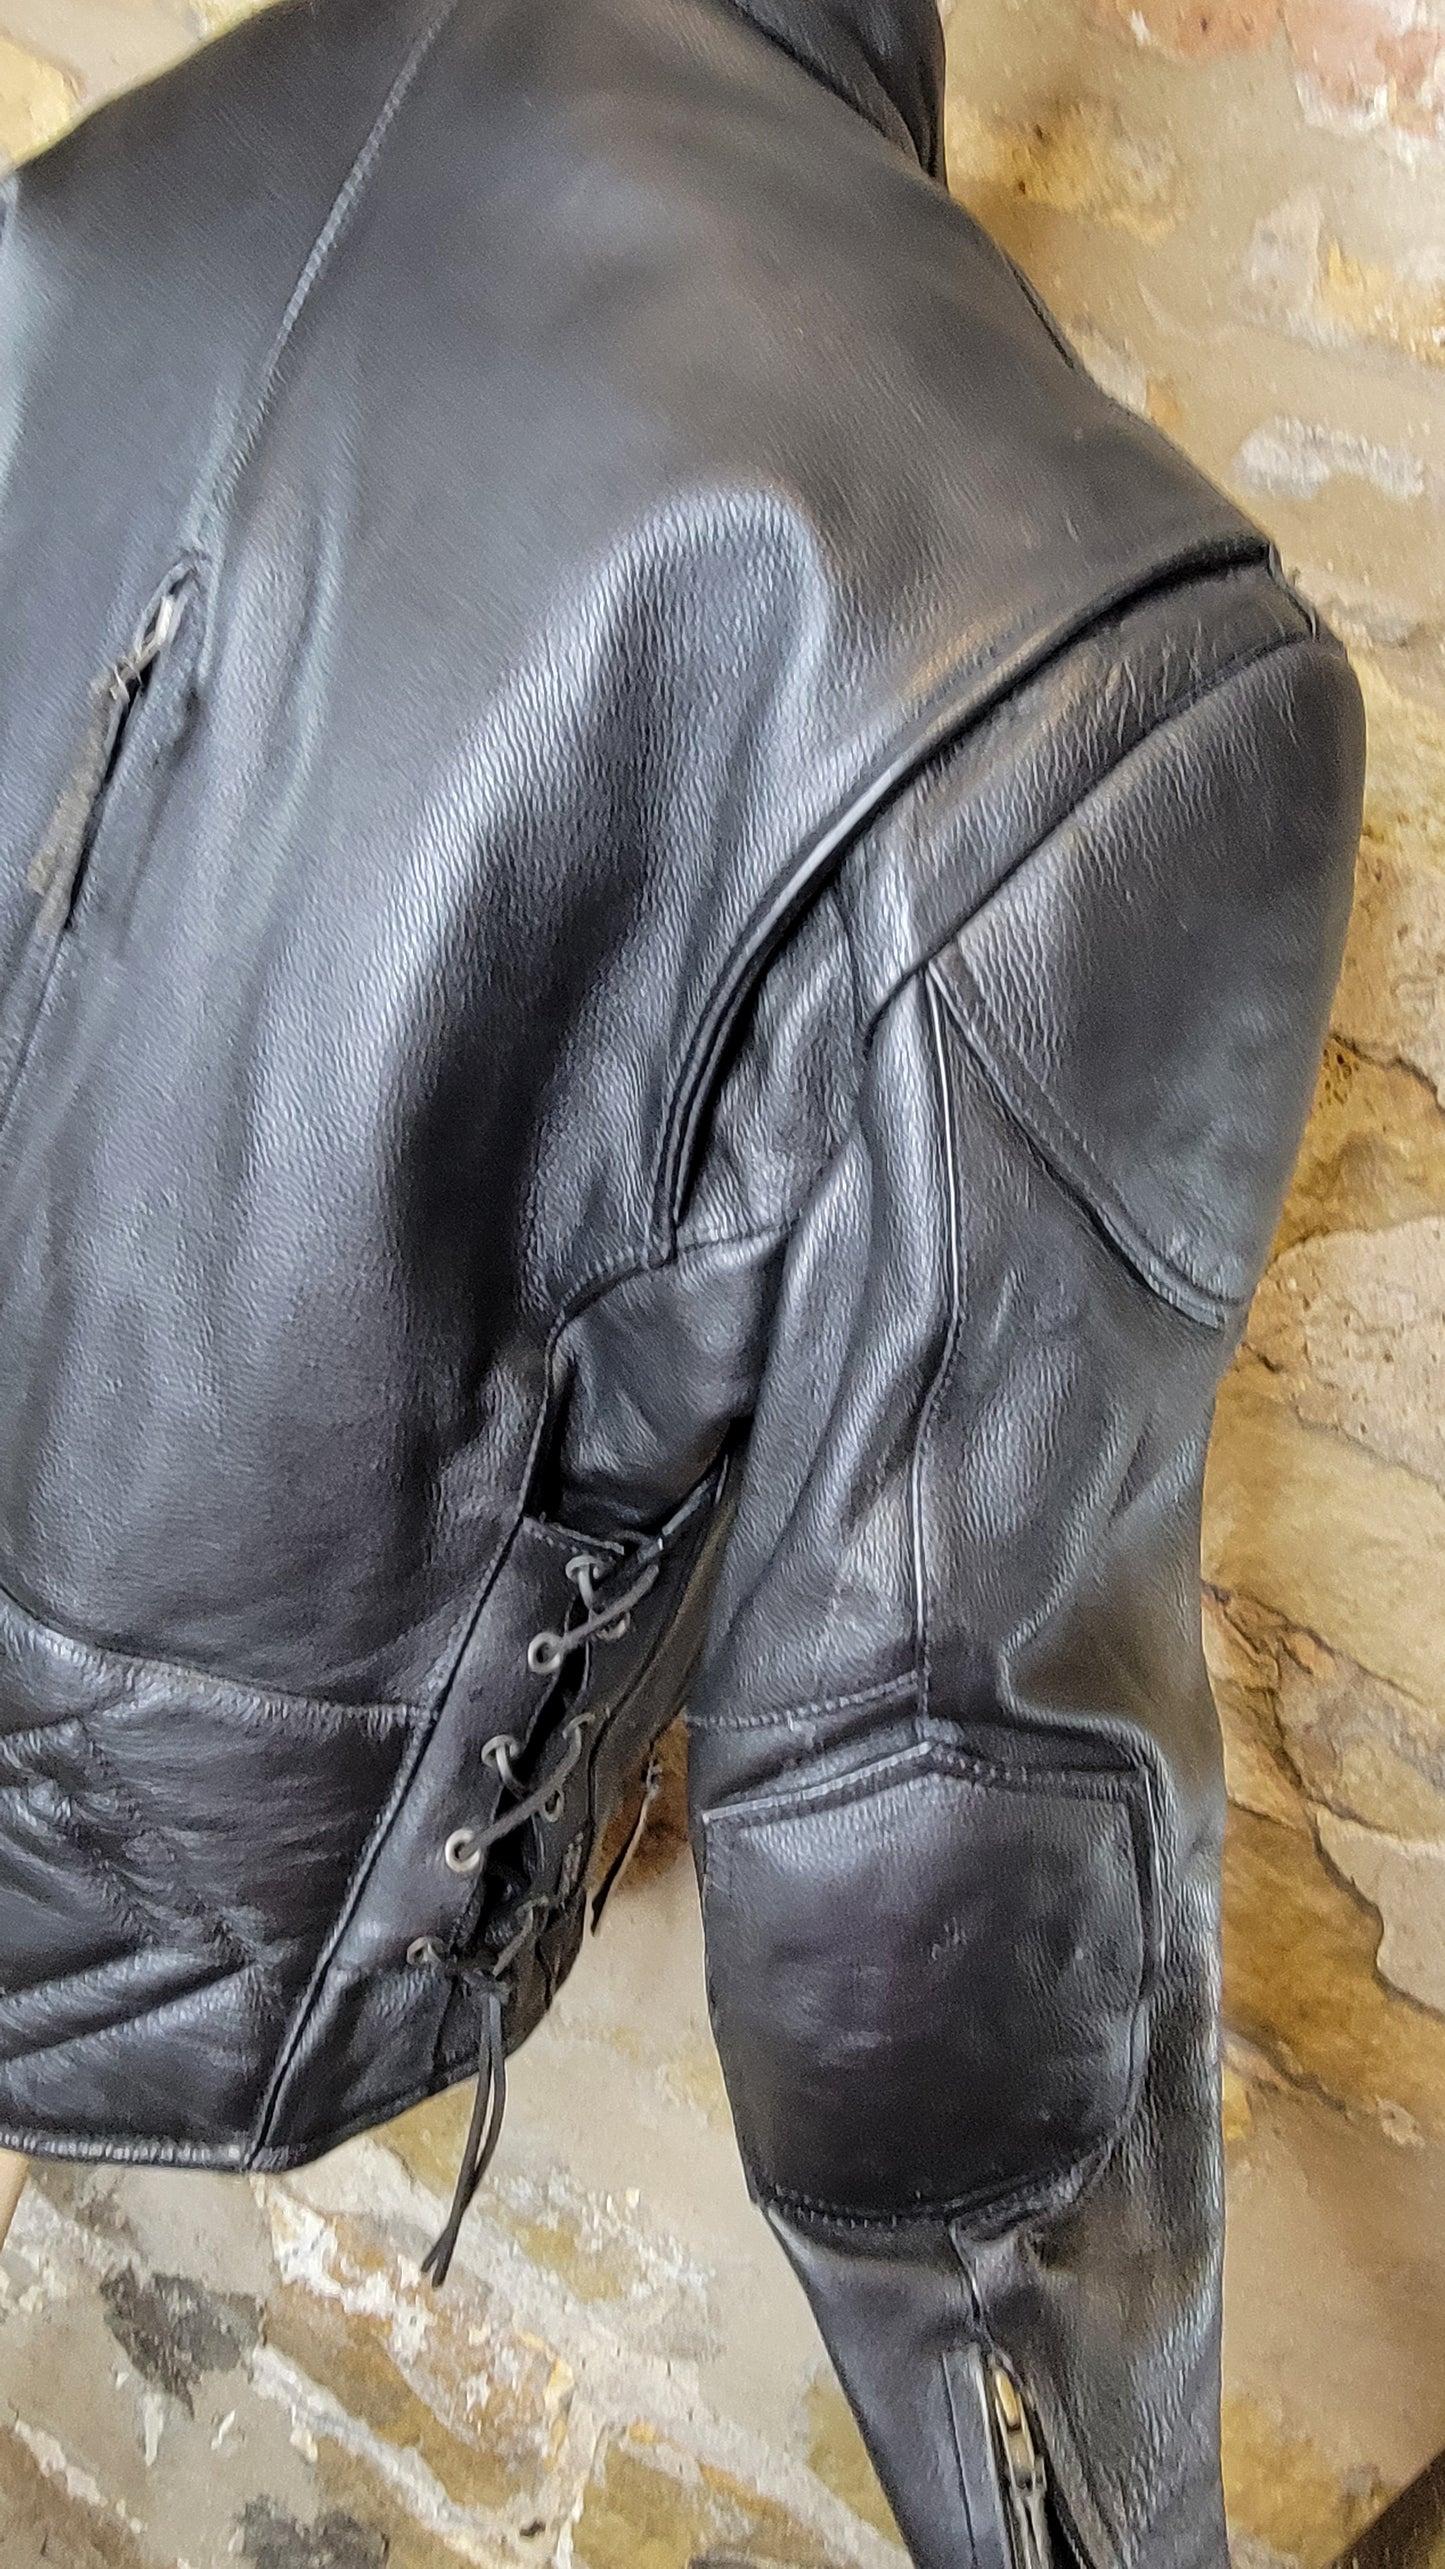 Leather King Black Motor Cycle Jacket Sz L